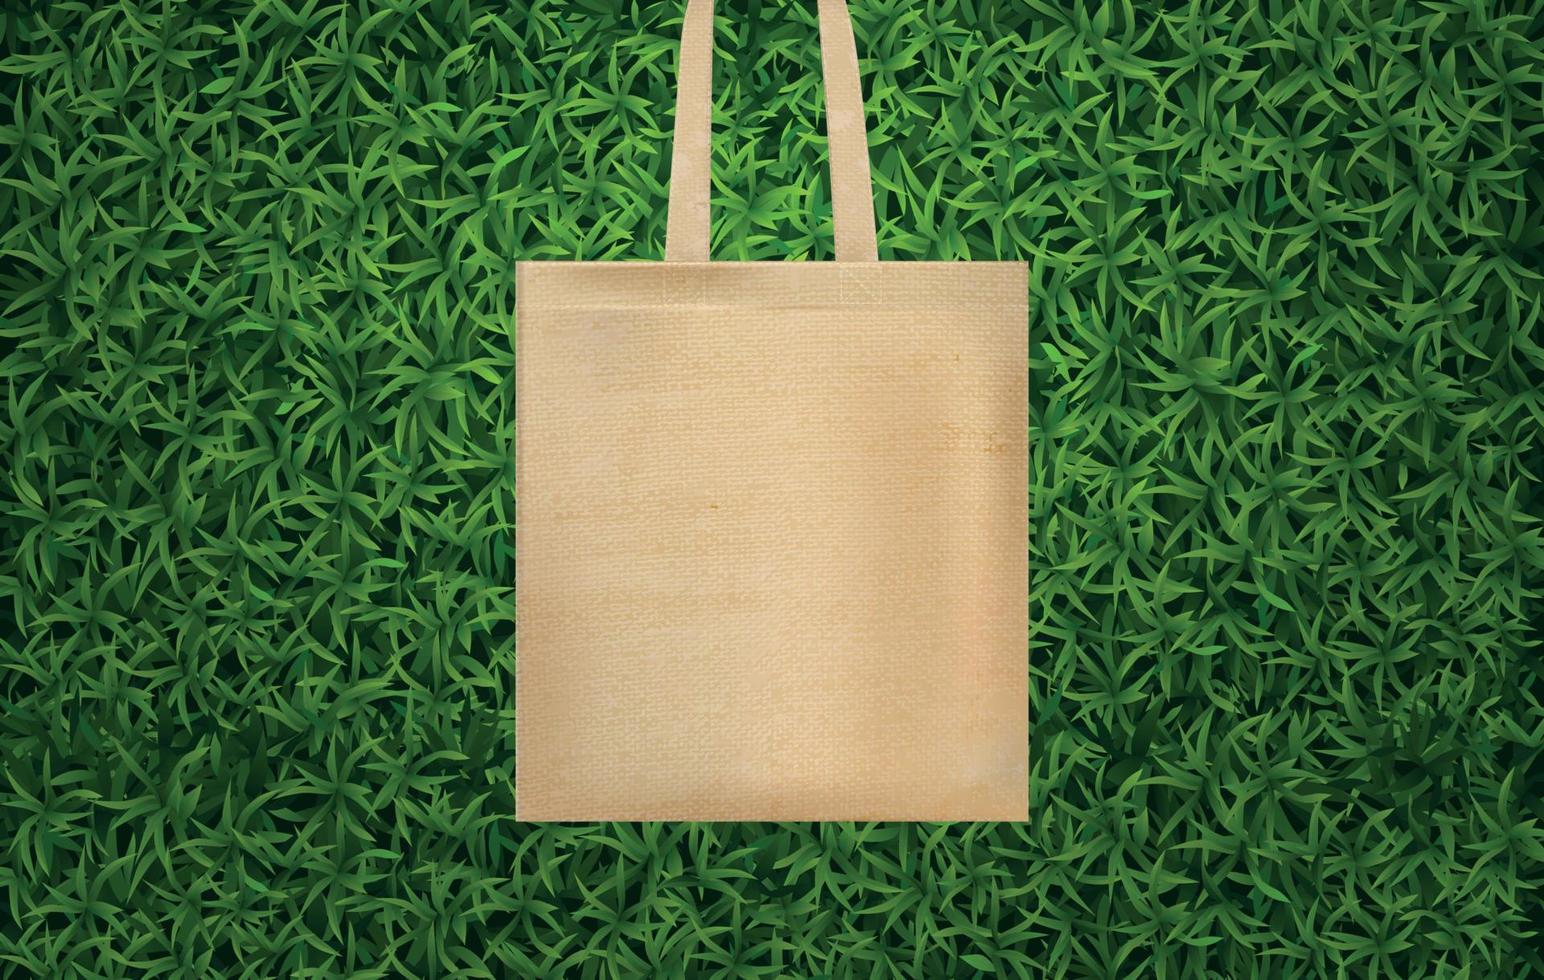 Realistic Hands Bag Green Grass Composition vector